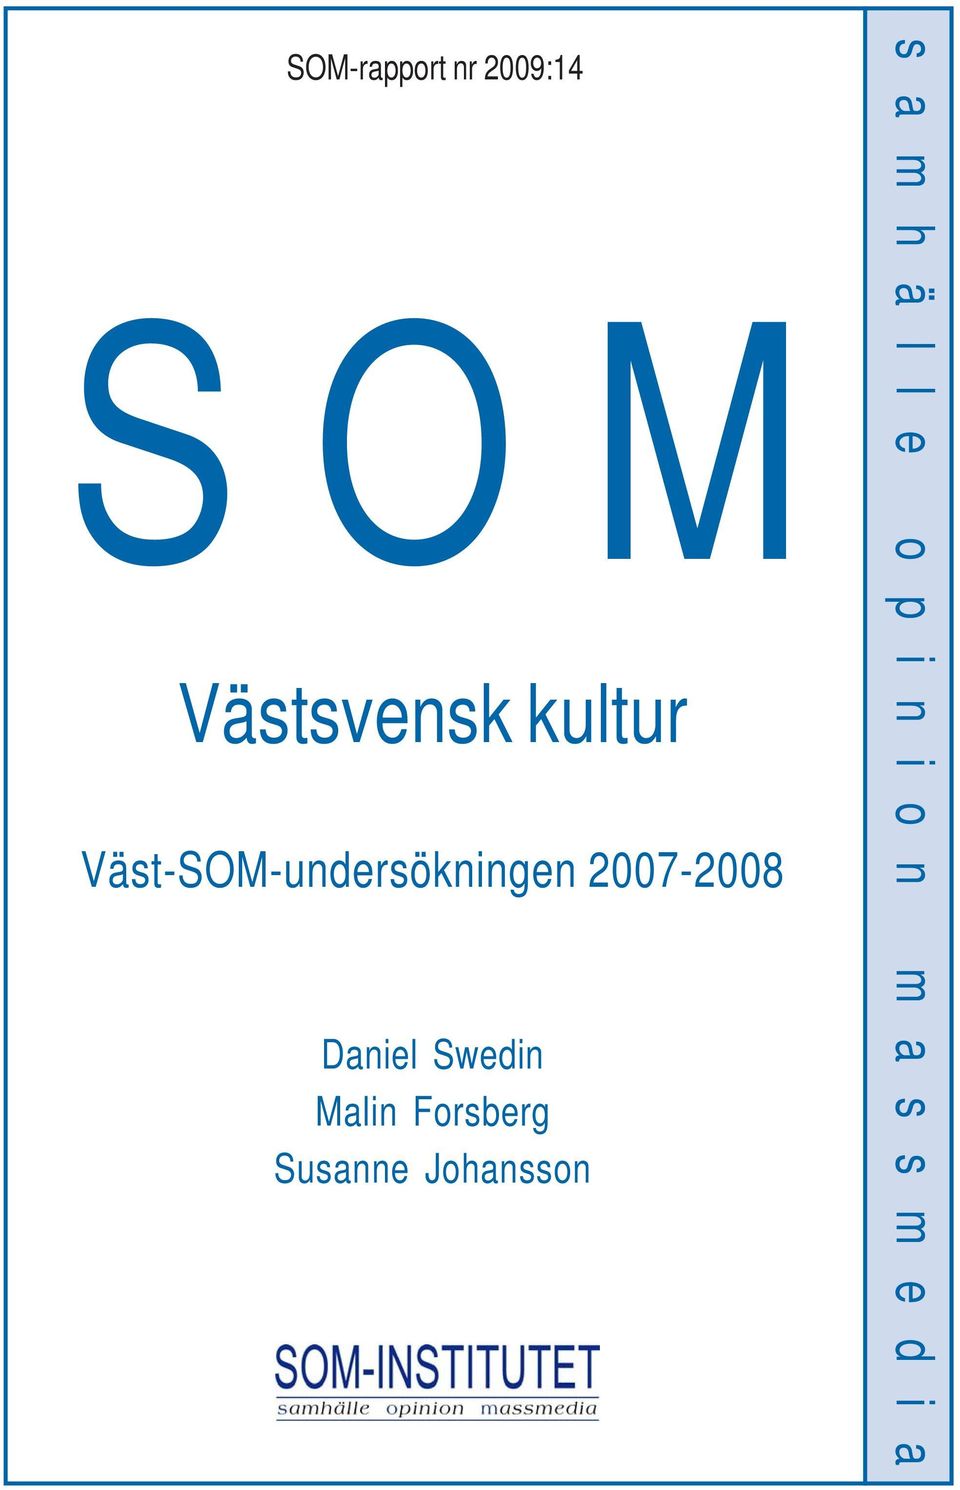 Daniel Swedin Malin Forsberg Susanne